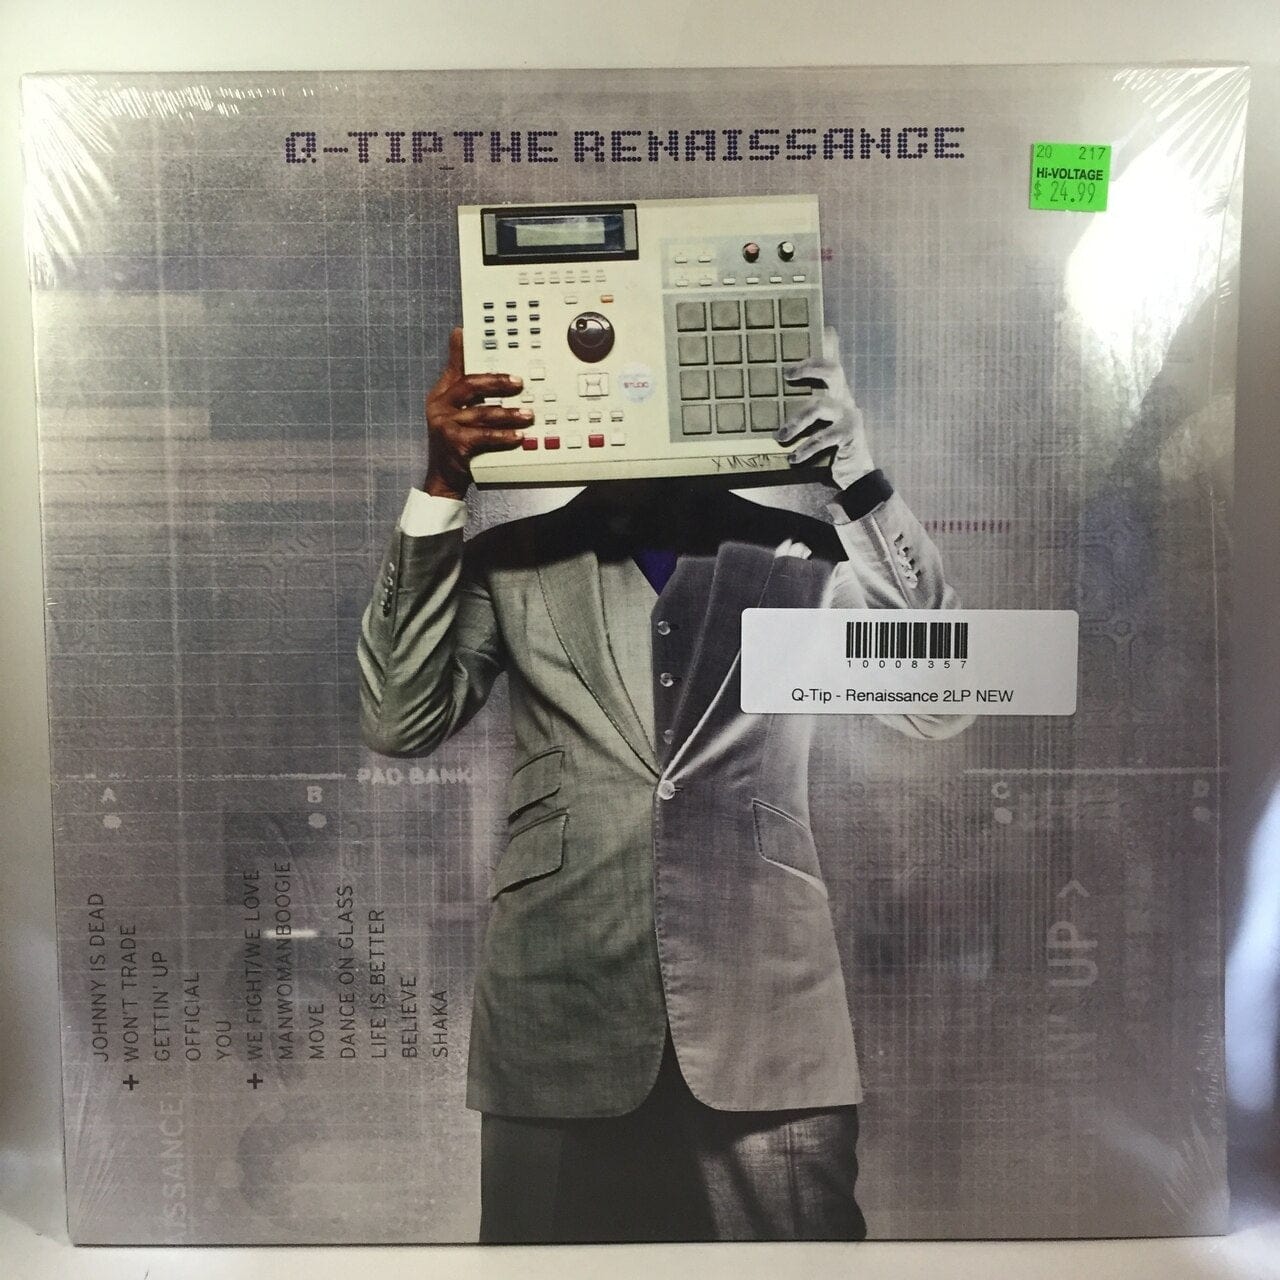 Q-Tip - Renaissance 2LP NEW – Hi-Voltage Records